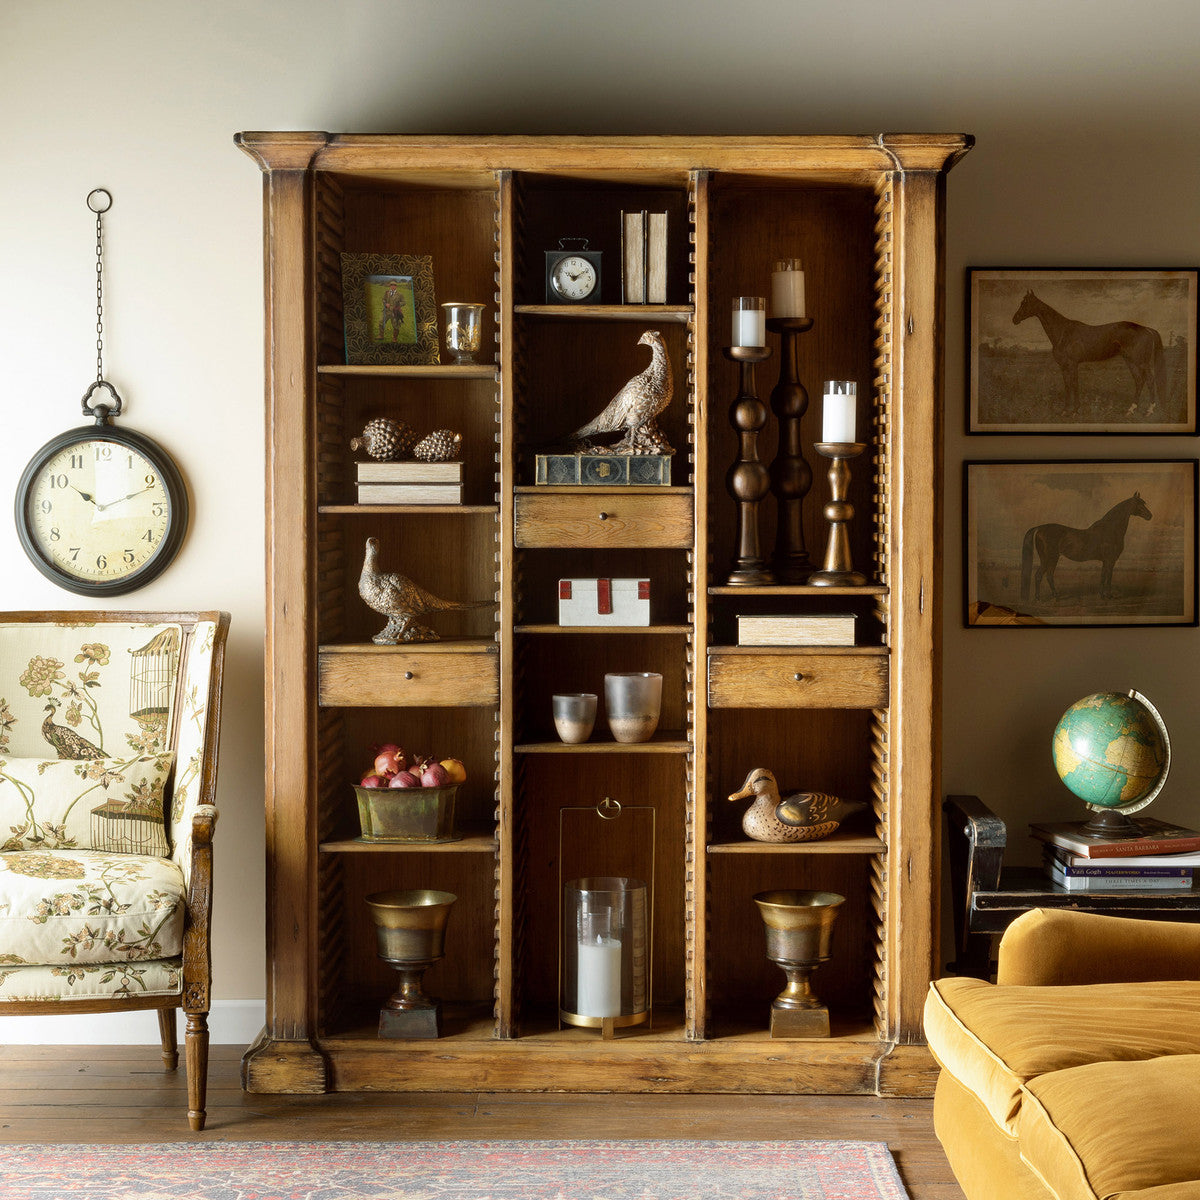 Bradley Adjustable Shelf Wooden Bookcase by Park Hill